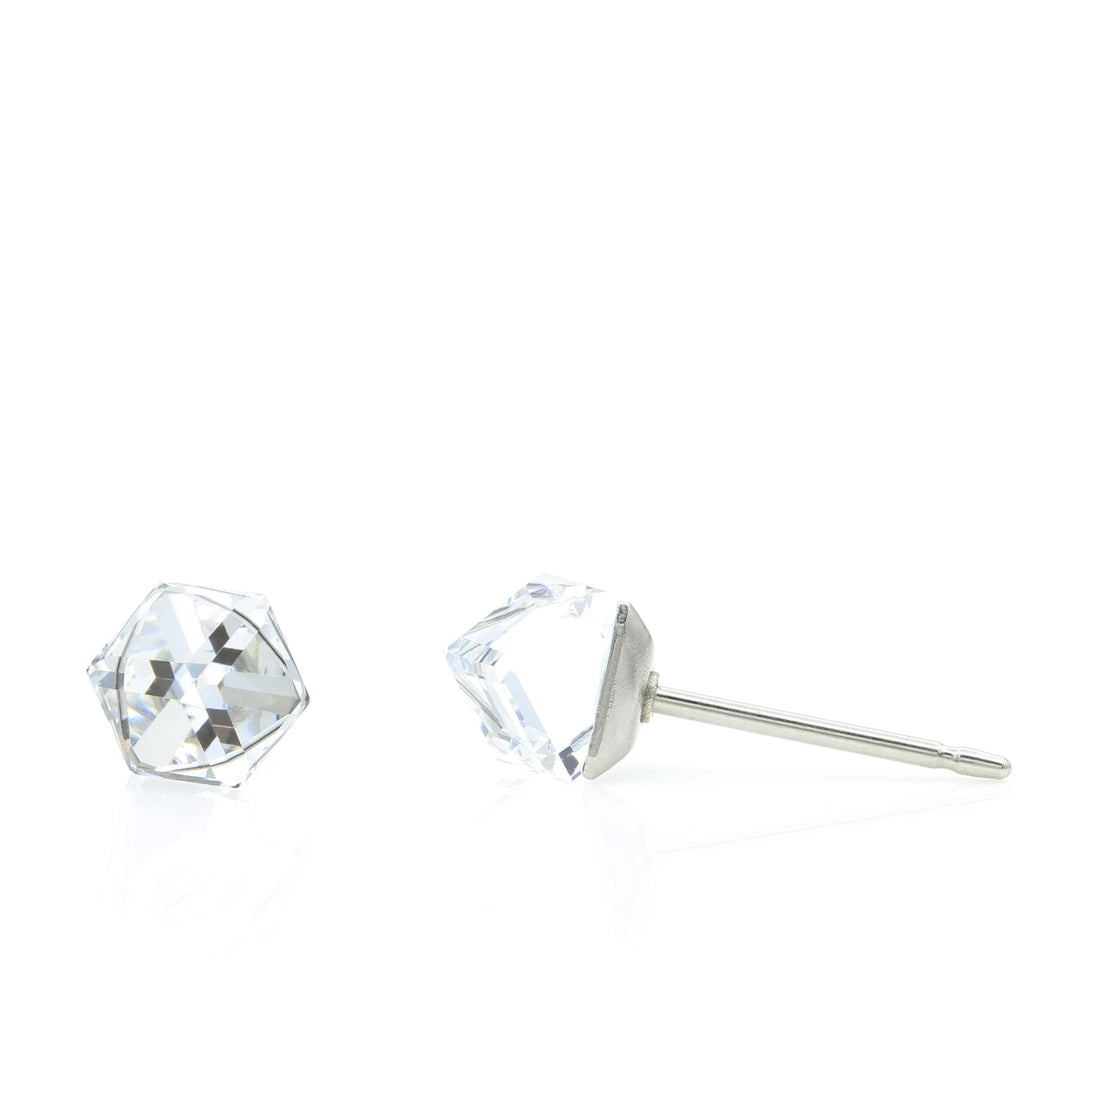 Chloe - 4mm Cubic Cut Genuine Crystal Earring Studs - Seona Earrings Crystal